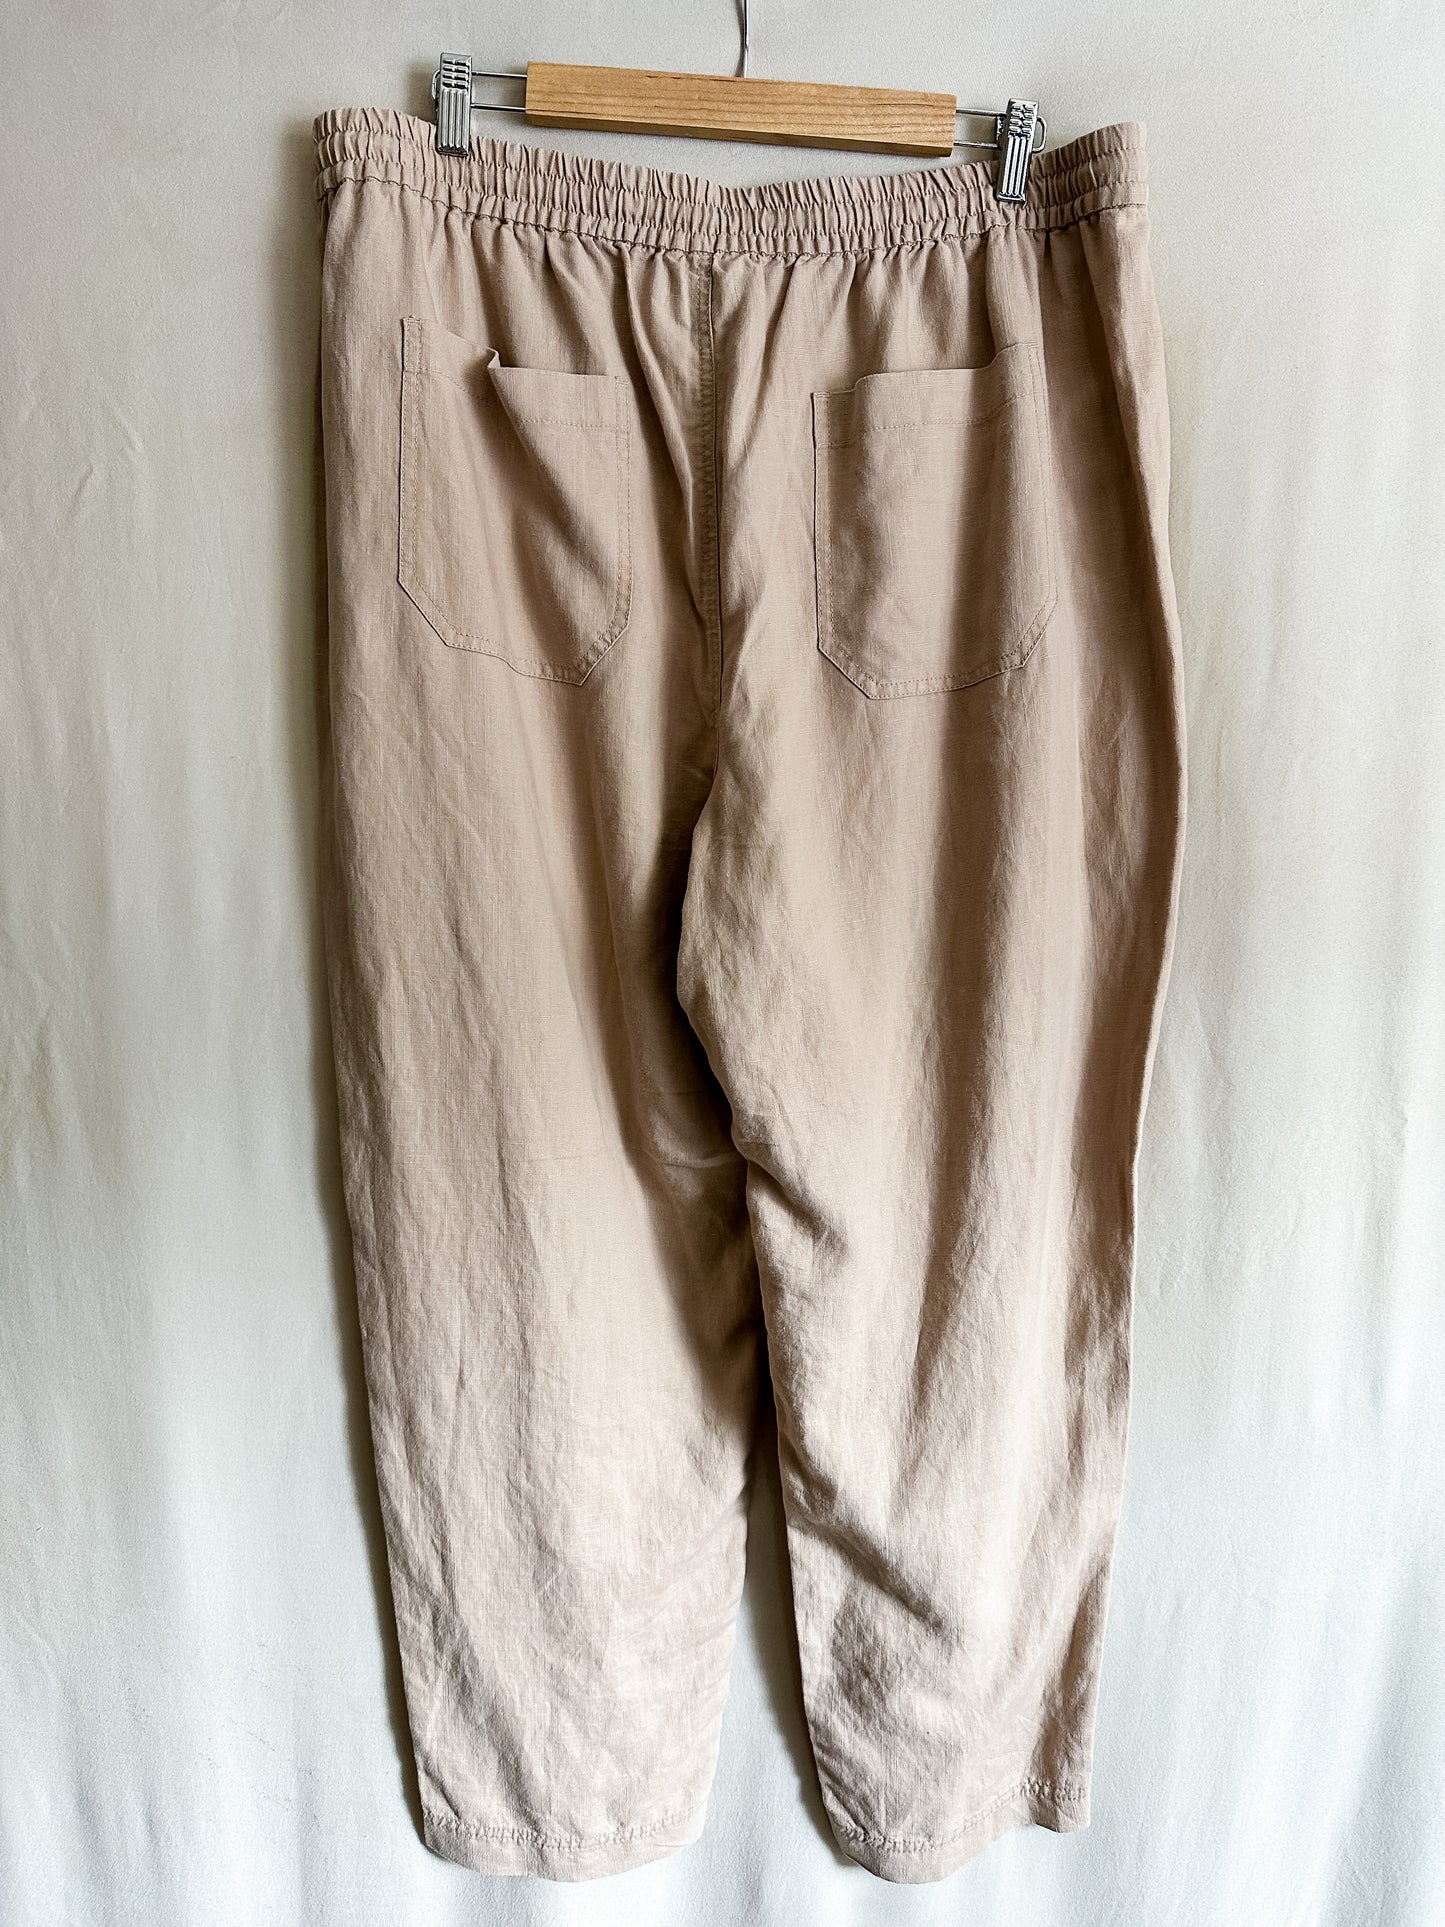 J. Crew Linen Blend Pull-on Pants (size XL)